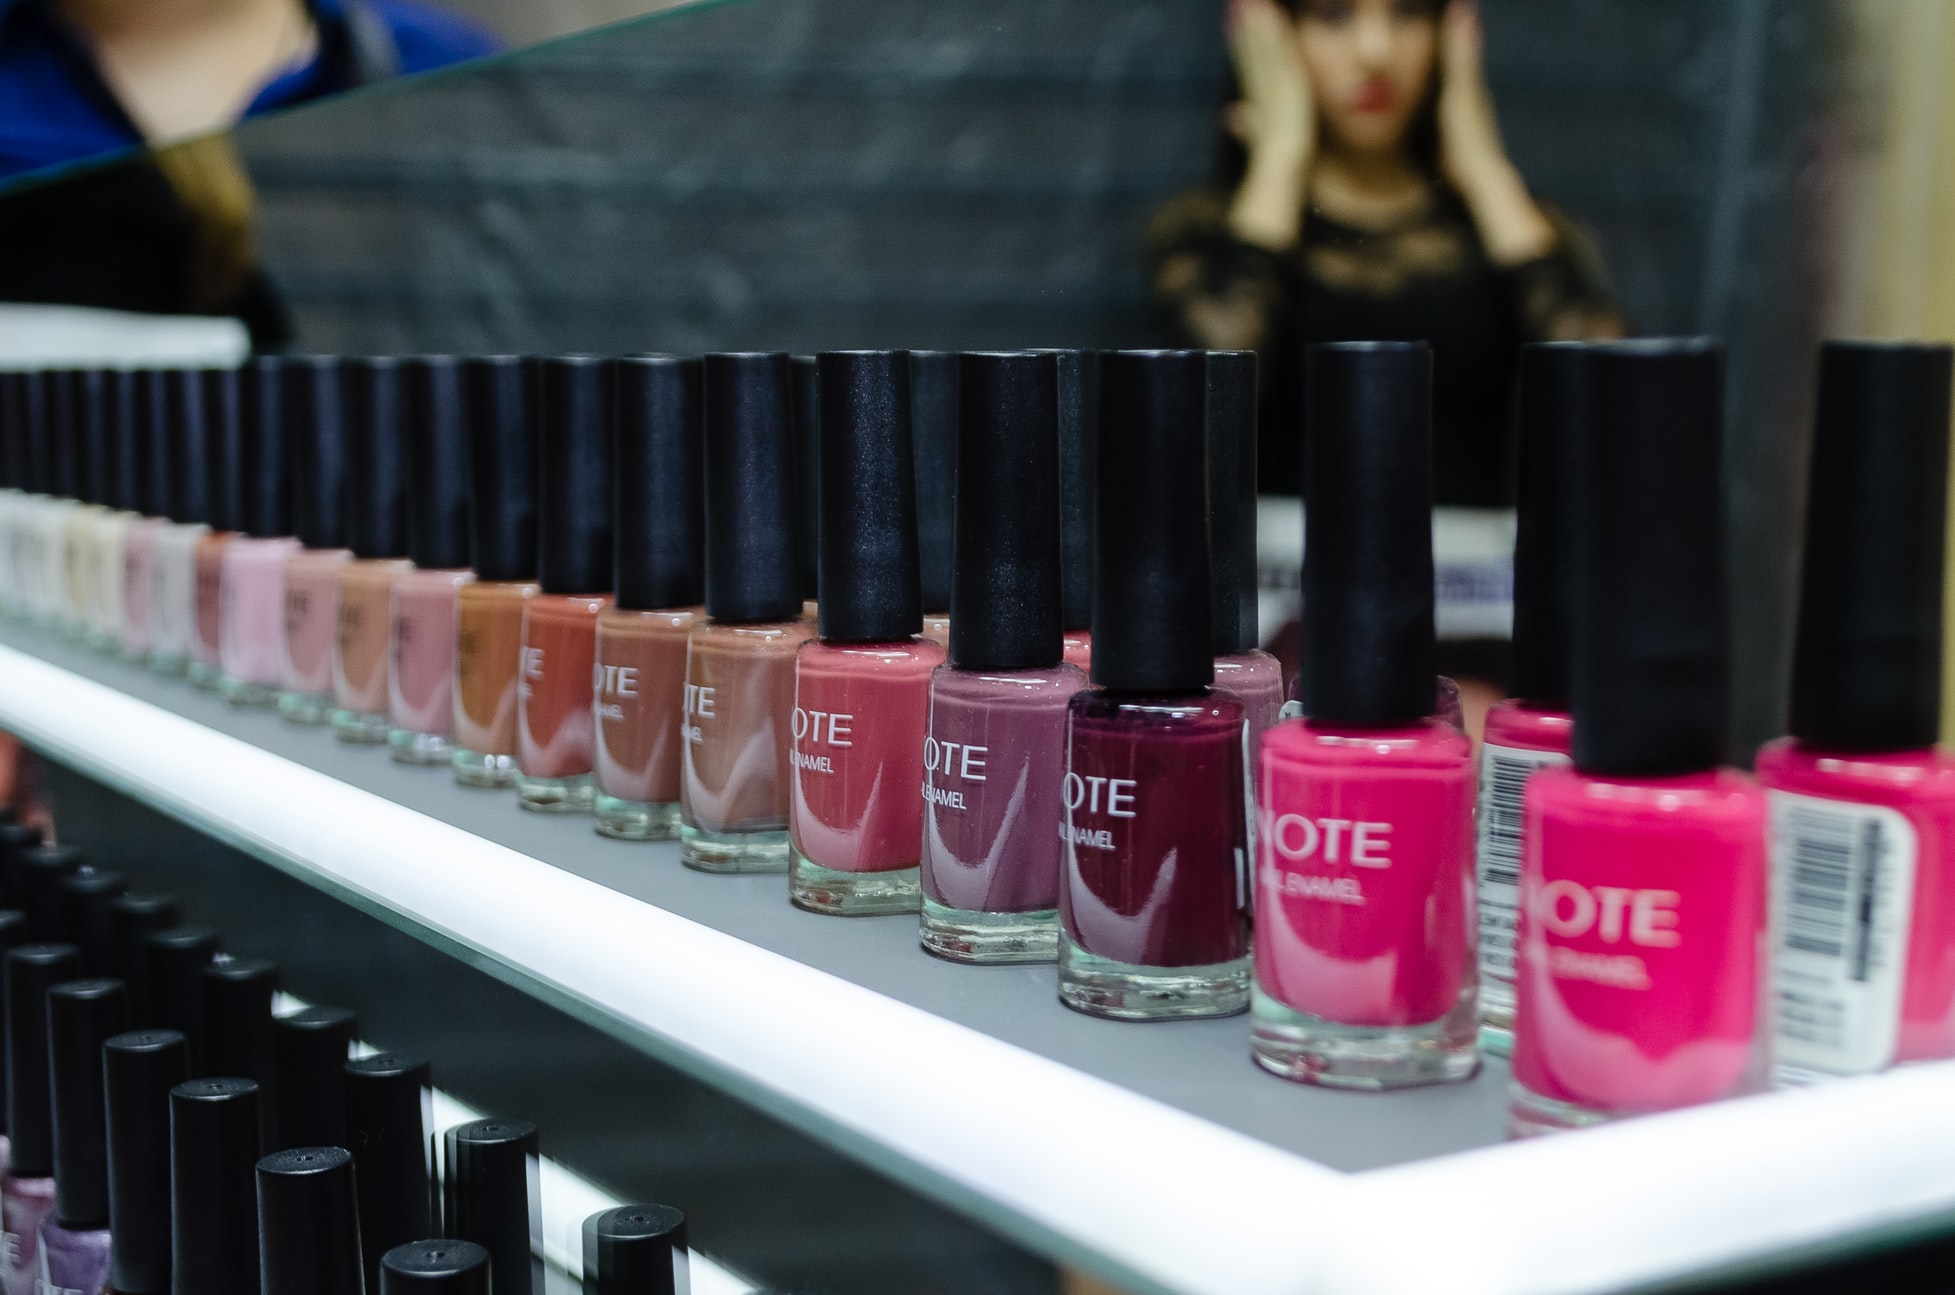 A shelf showcasing favorite essie nail polish colors.